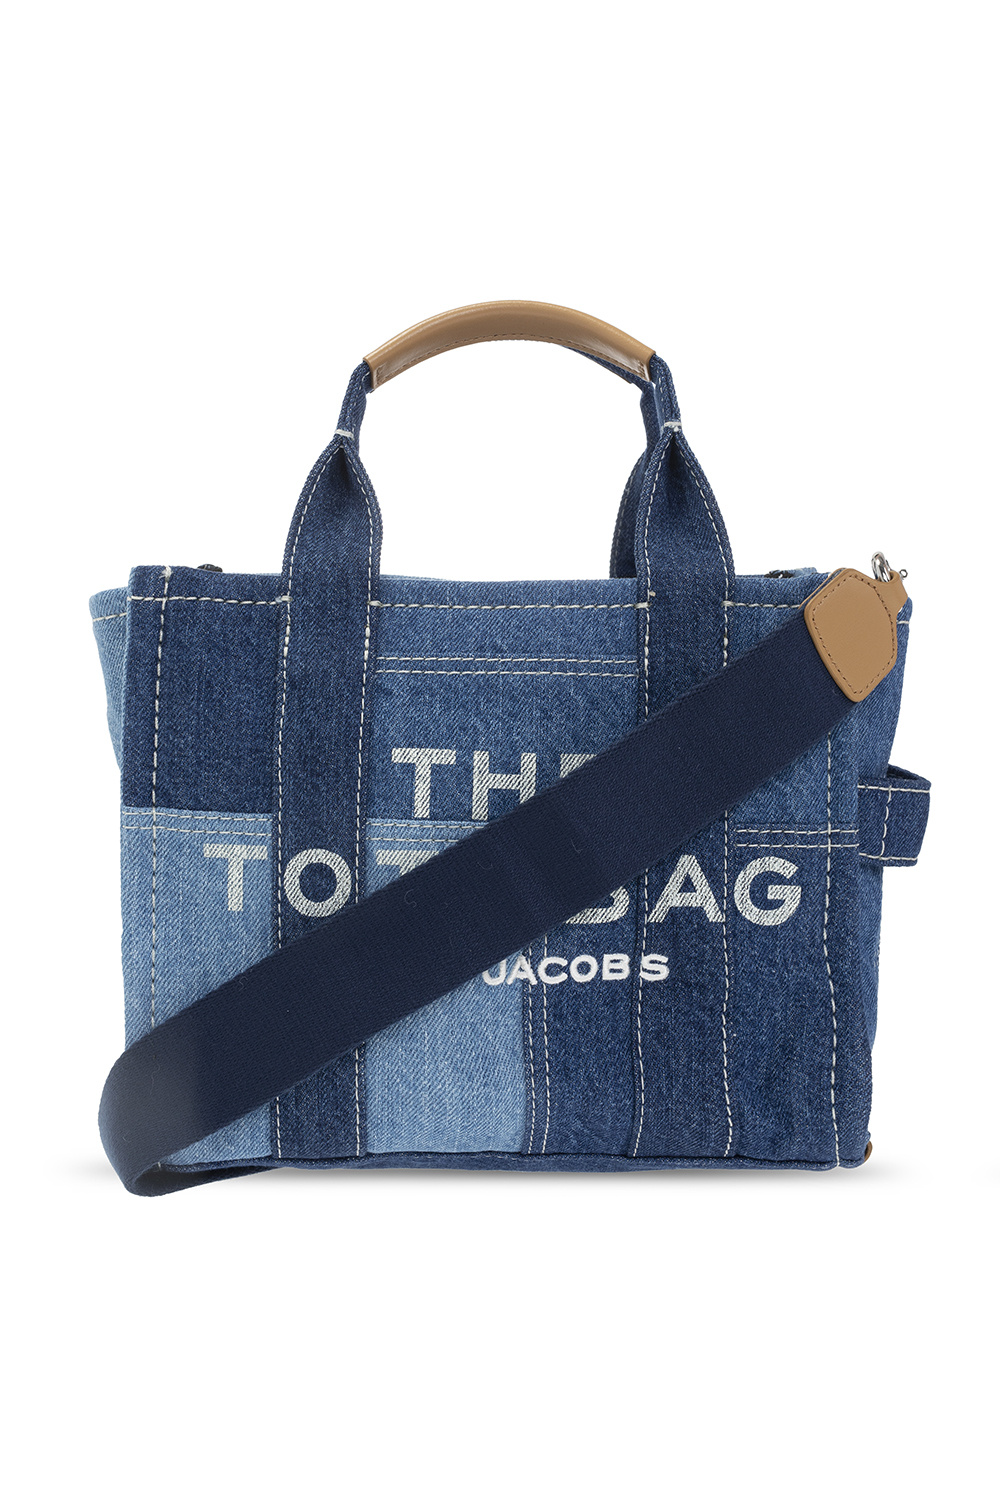 Marc by Marc Jacobs Blue Shoulder Handle Bag